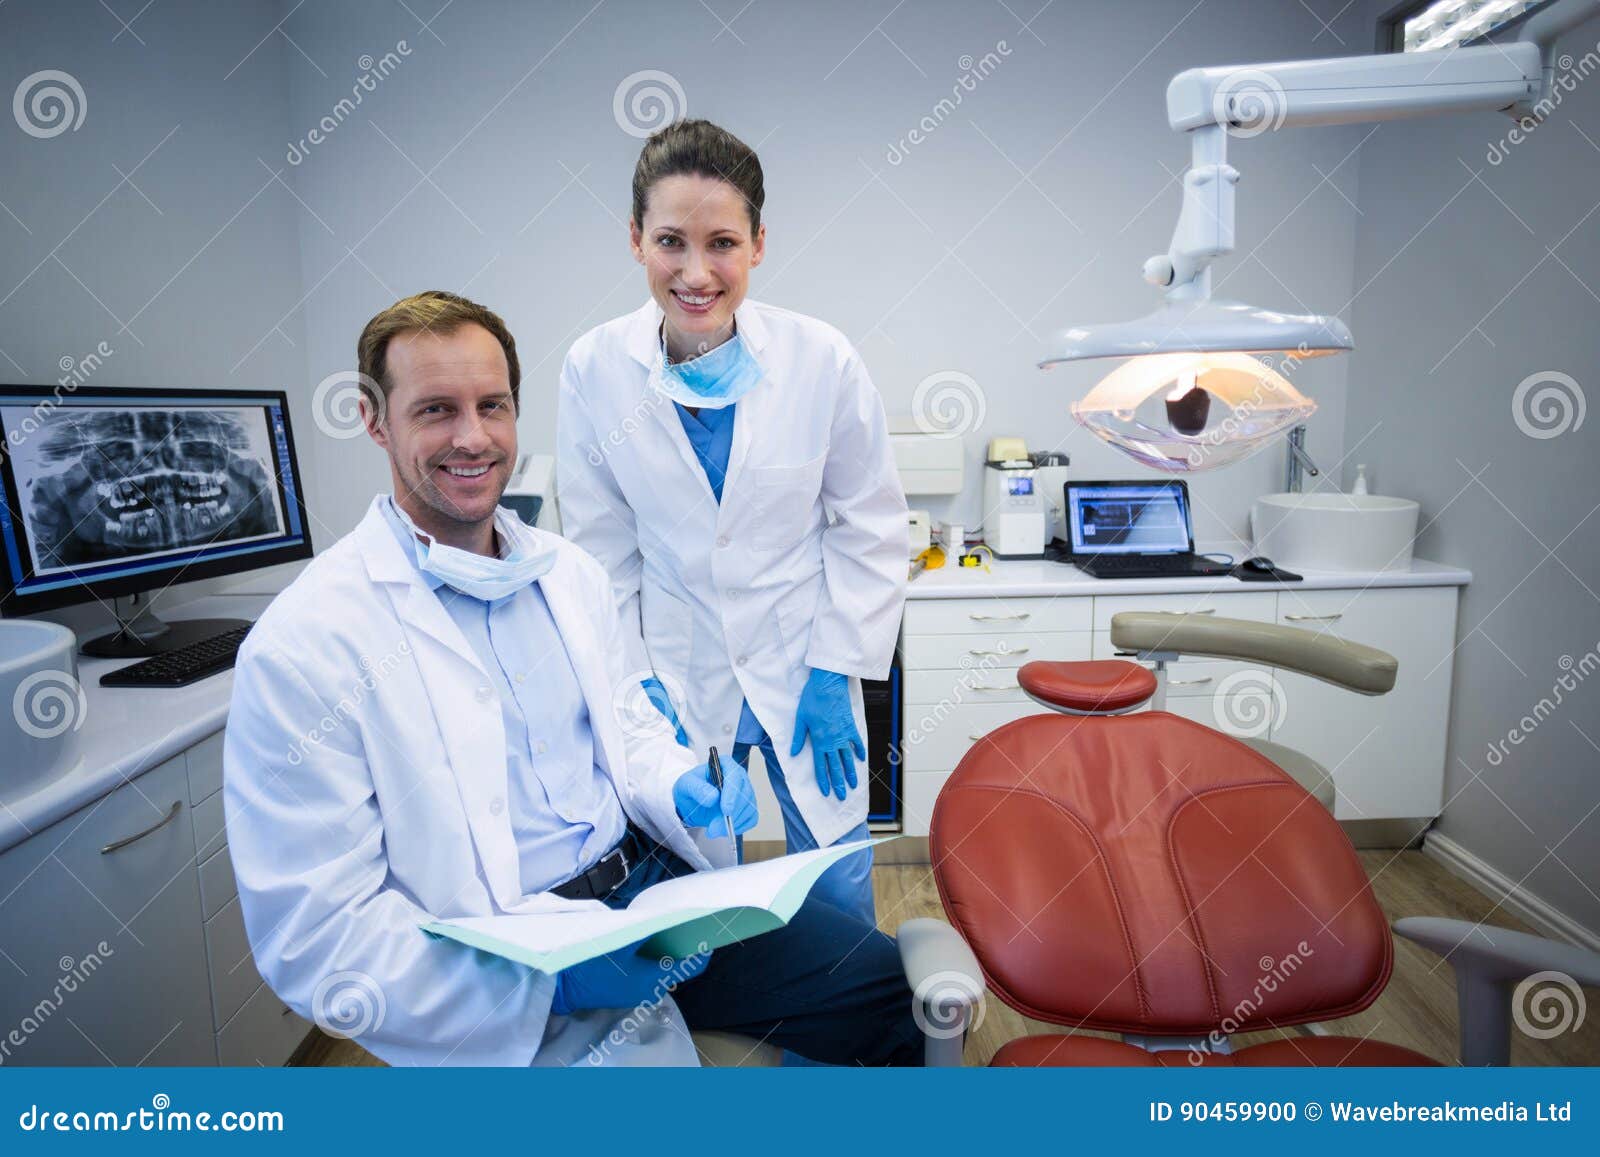 portrait of smiling dentists holding medical report